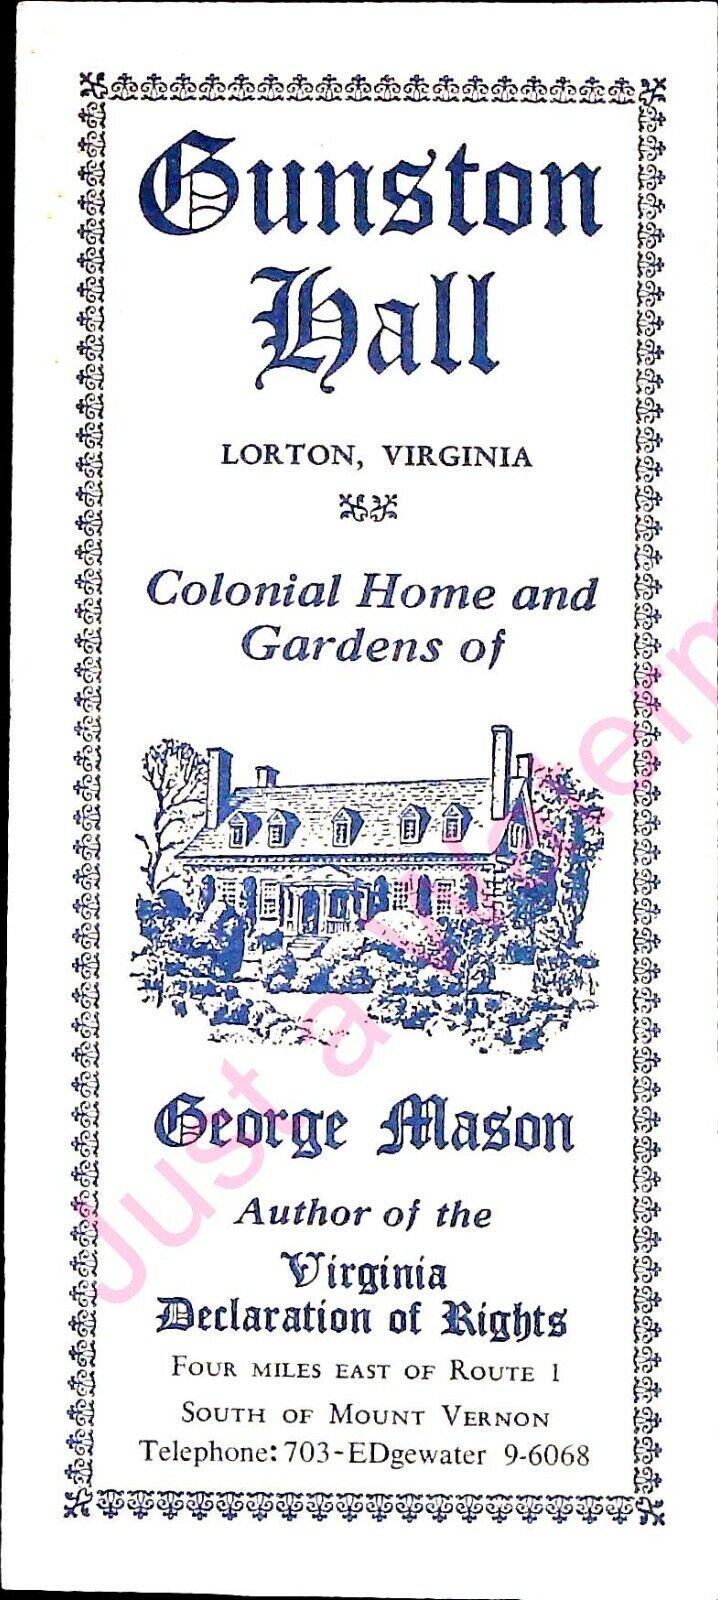 Vintage Travel Brochure Gunston Hall Lorton Virginia Colonial Home and Gardens